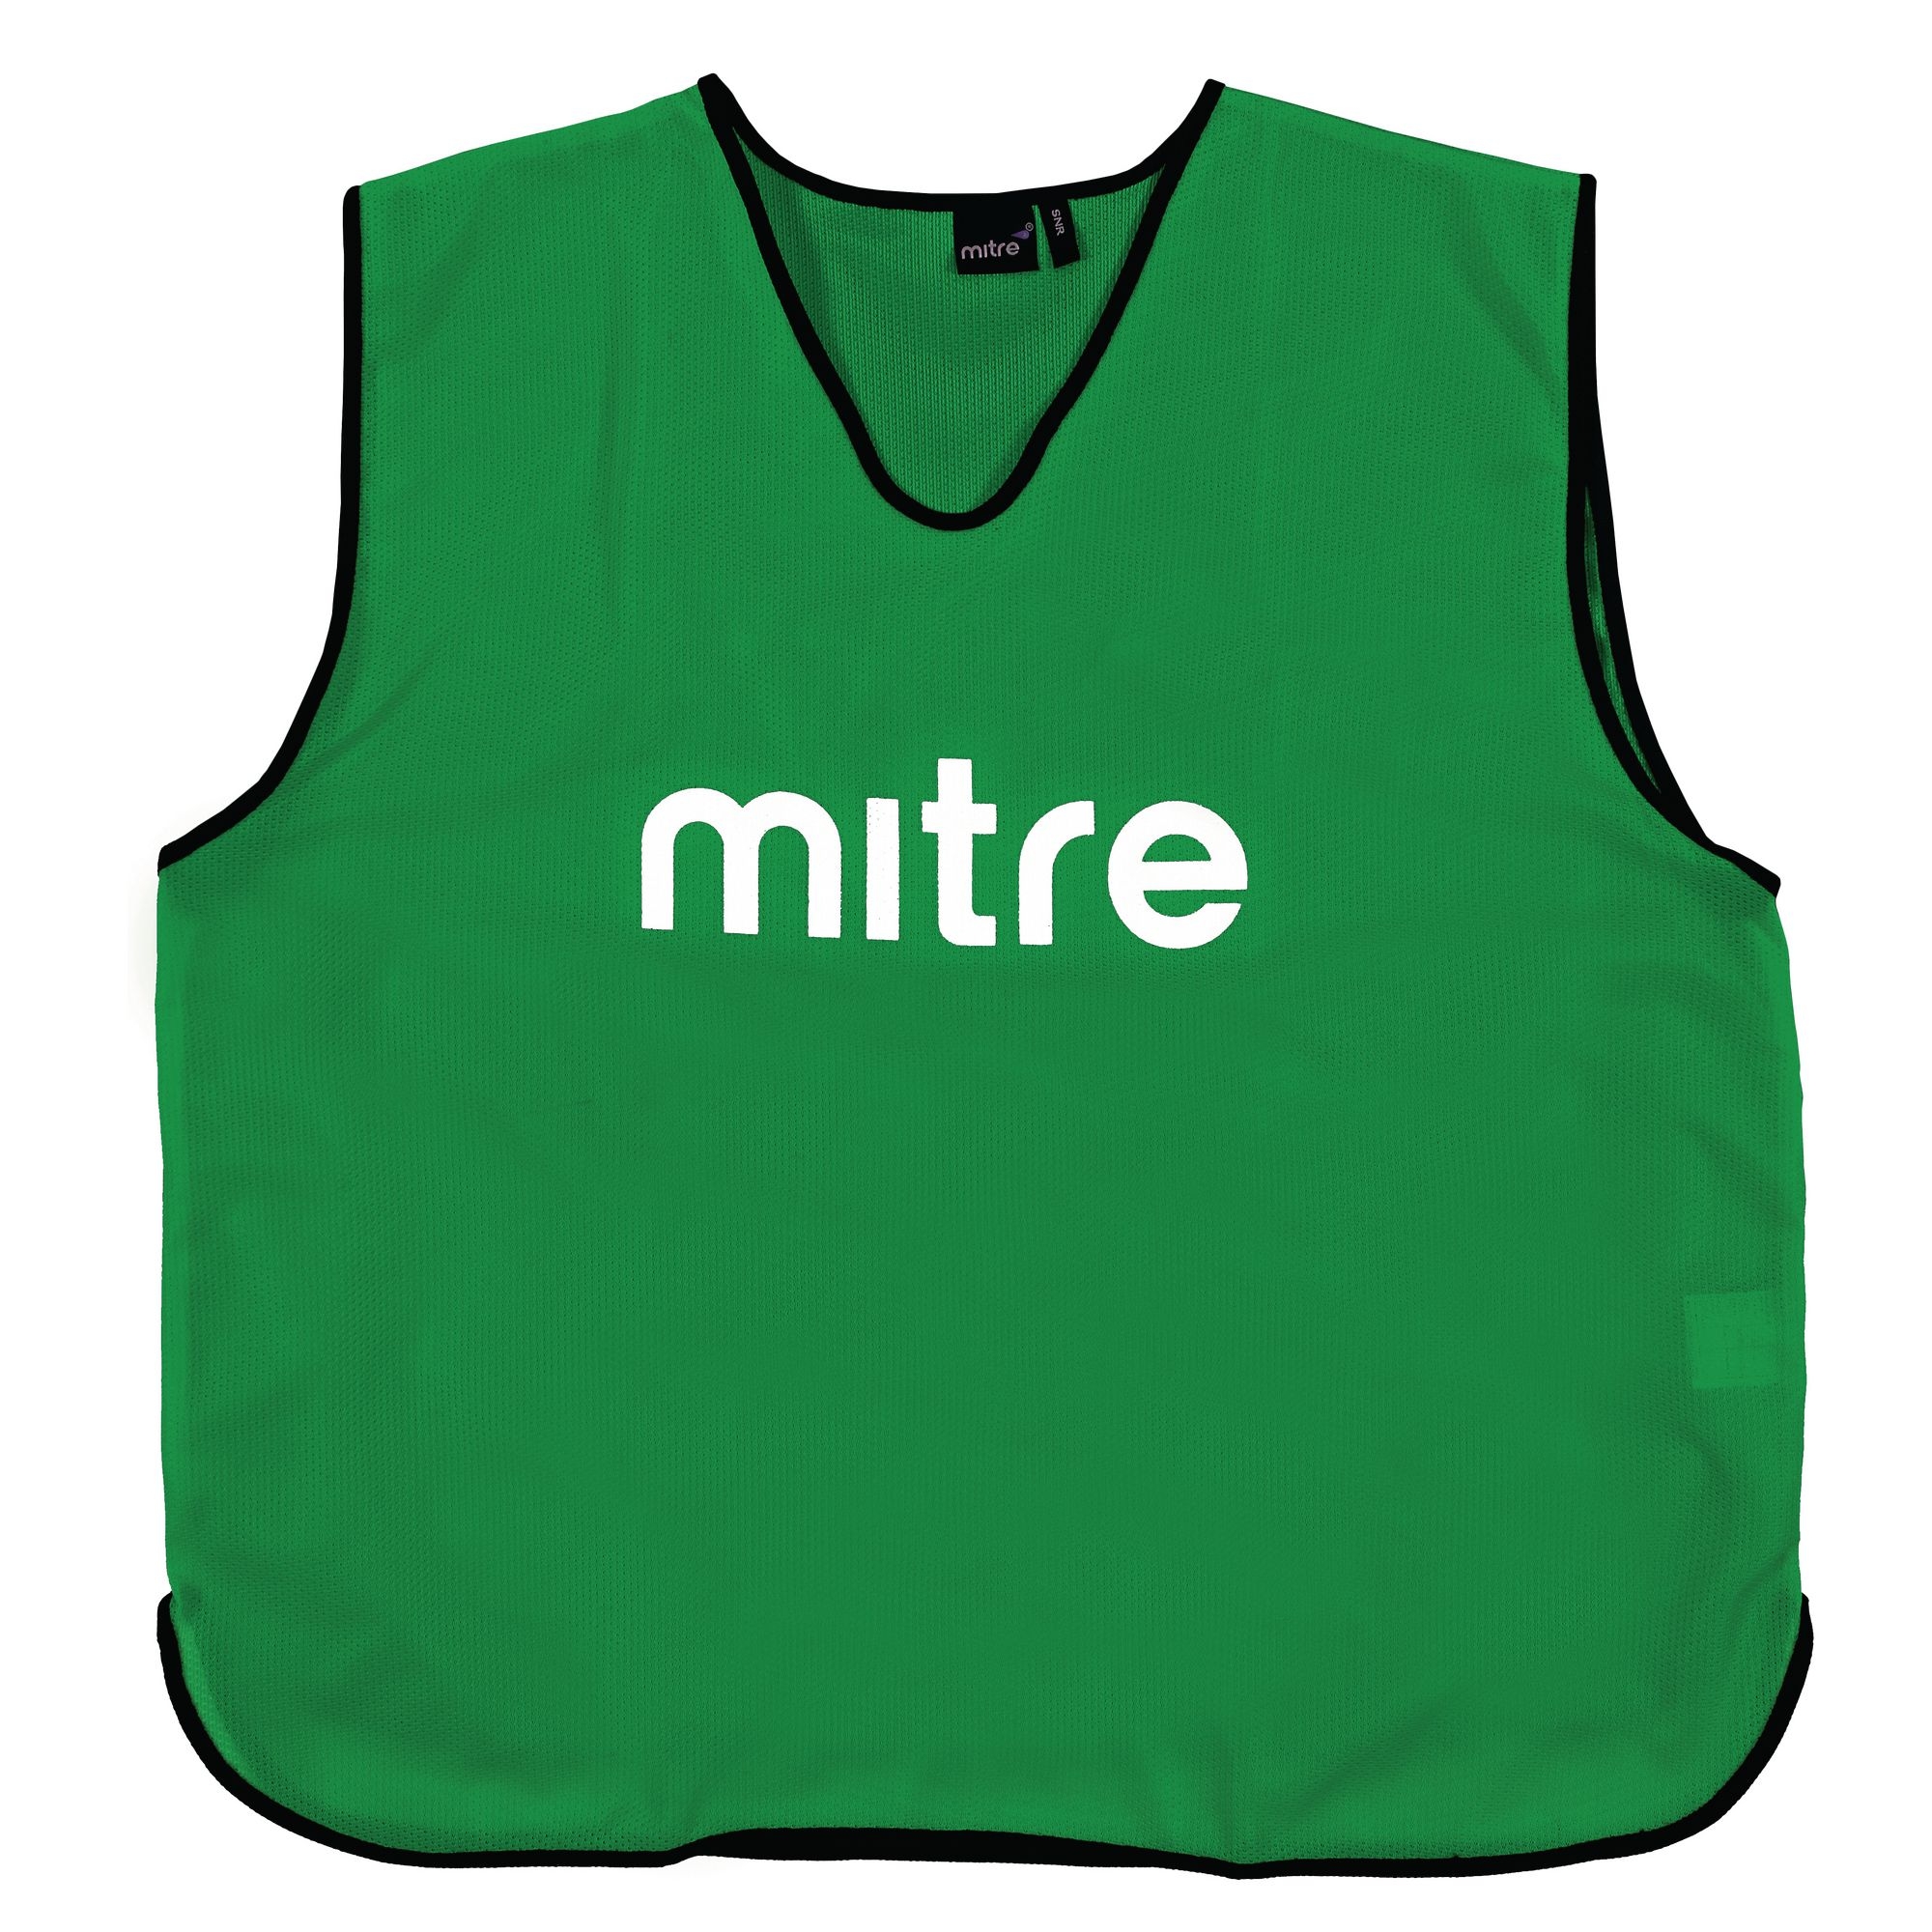 Mitre Training Bib - Adult Large-3 Extra Large - Green/Black